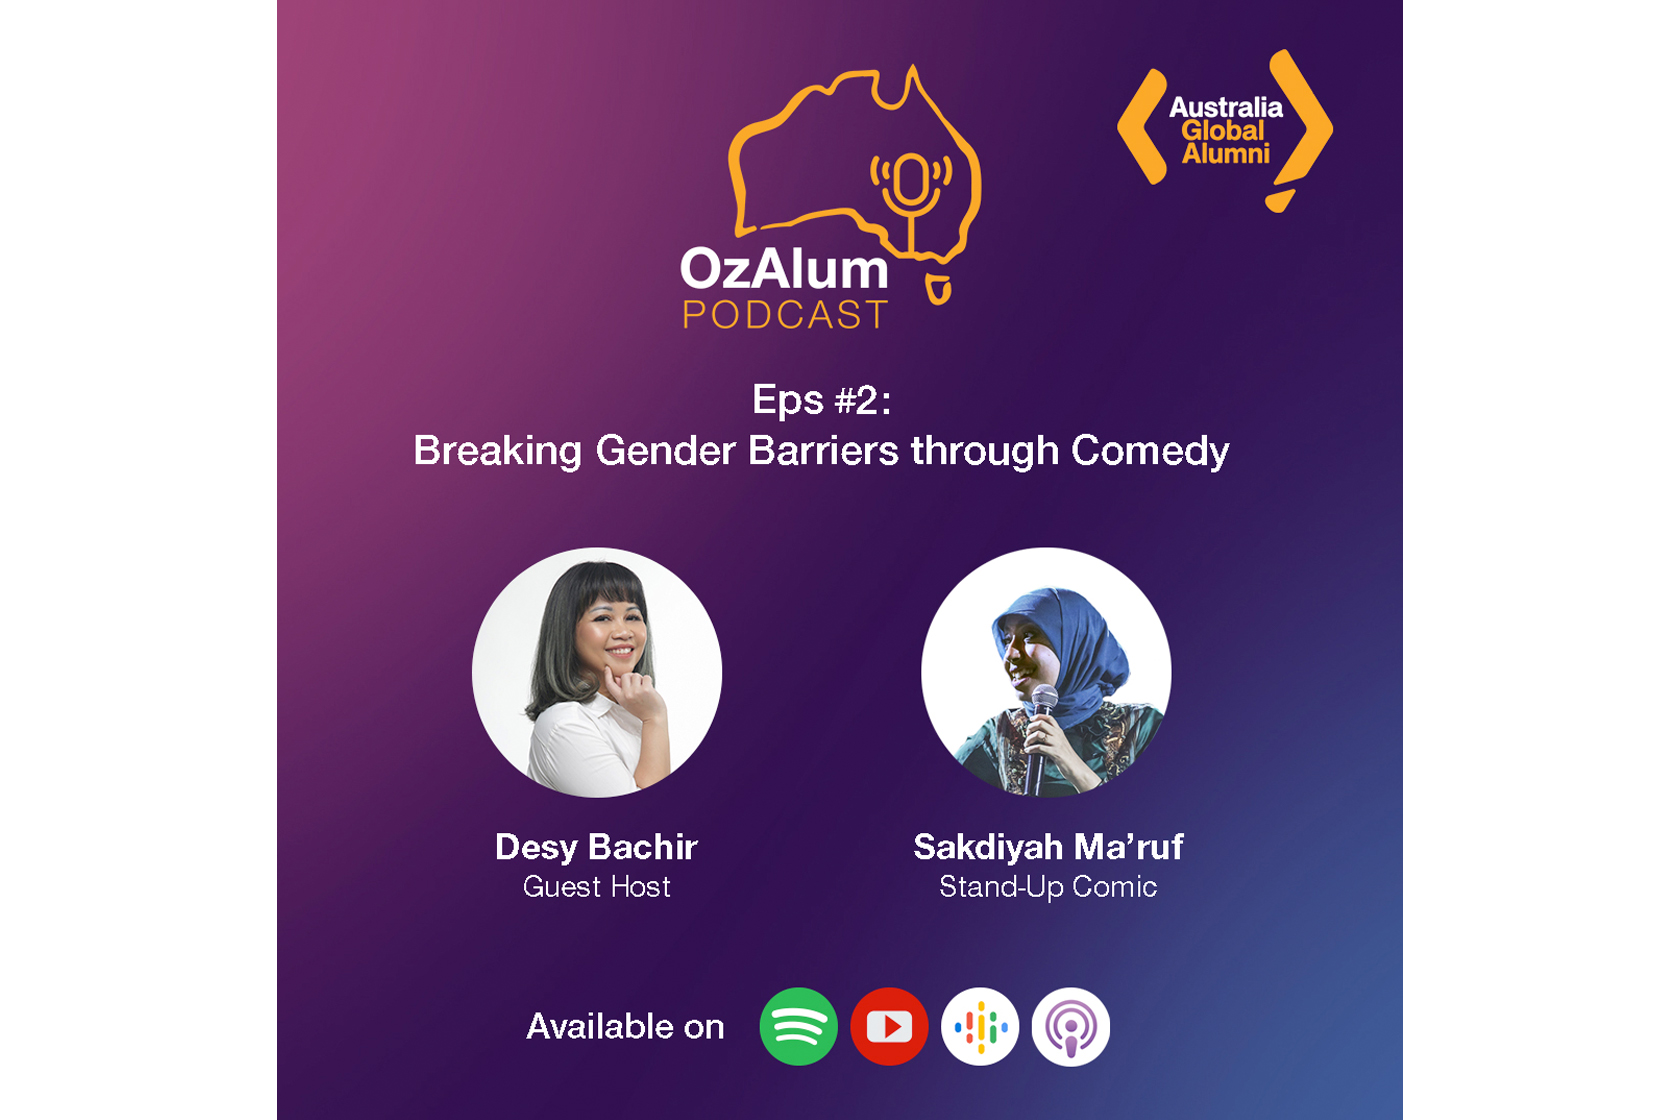 OzAlum Podcast Episode 2: Breaking Gender Barriers through Comedy